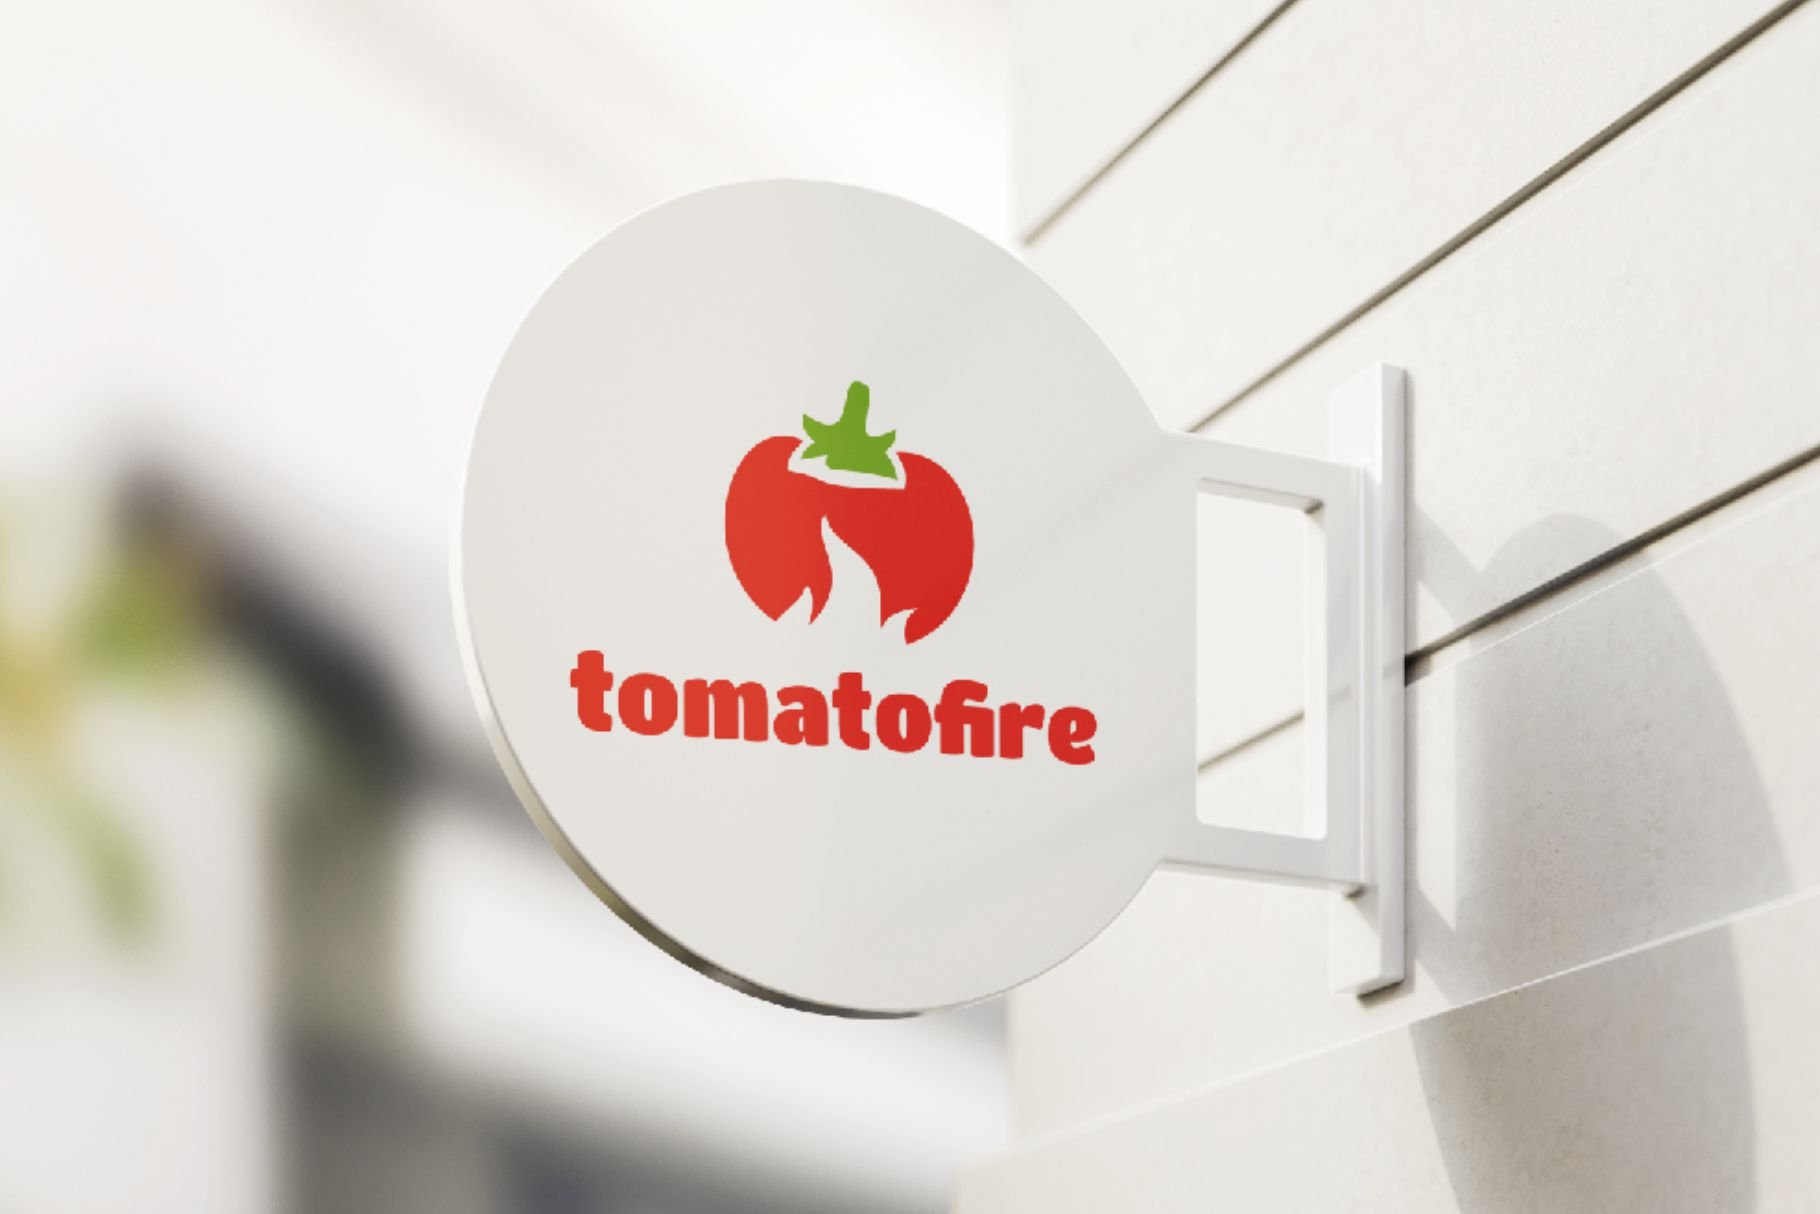 Tomato fire logo vector template cover image.